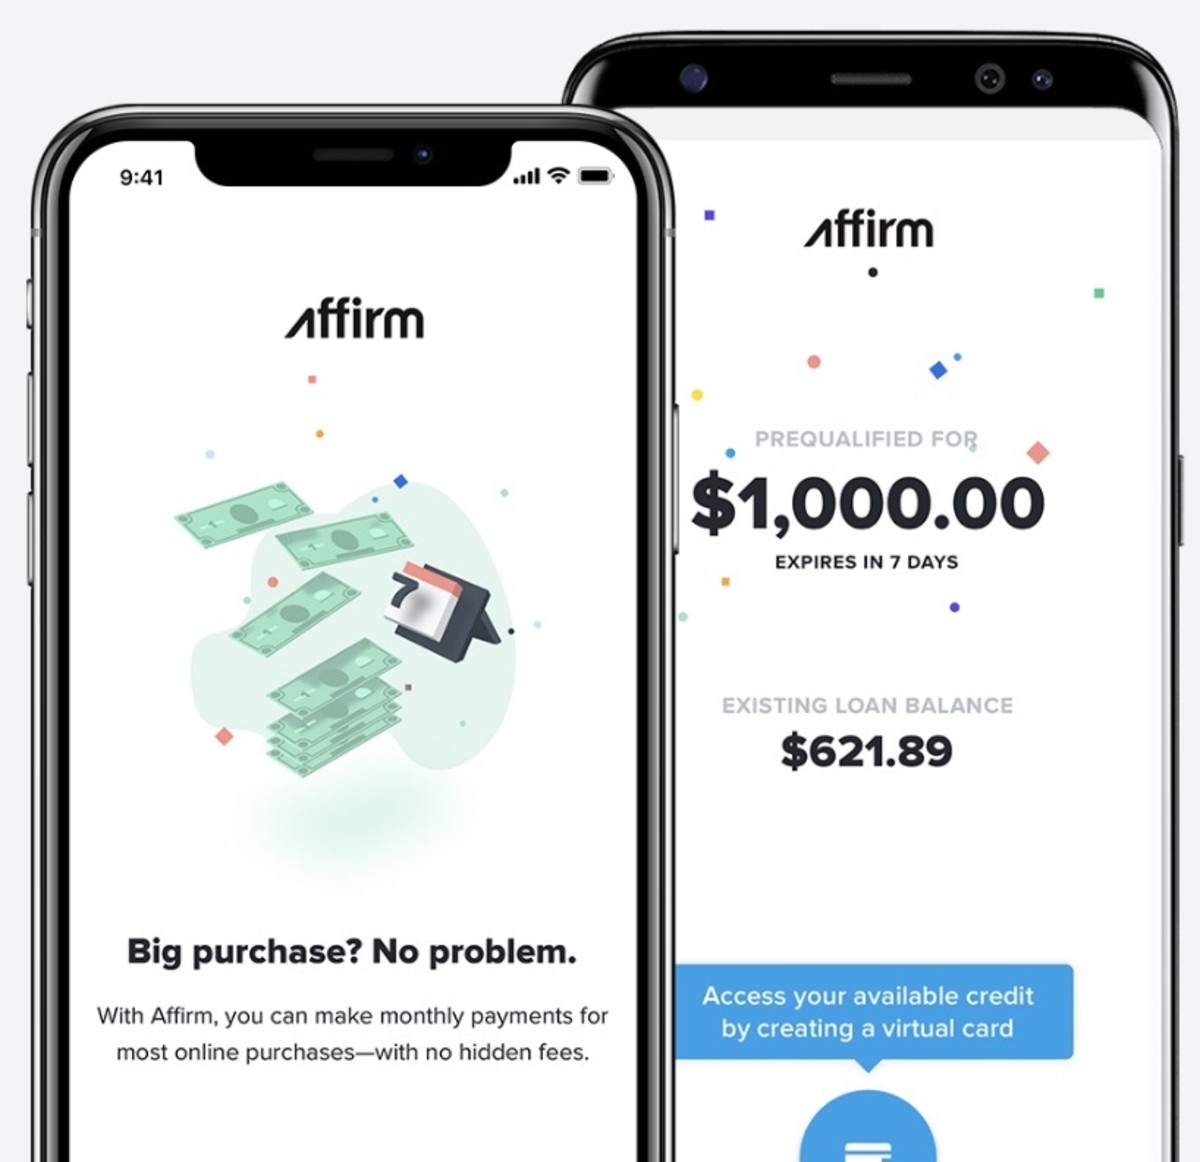 Affirm - Apps Like Brigit and MoneyLion